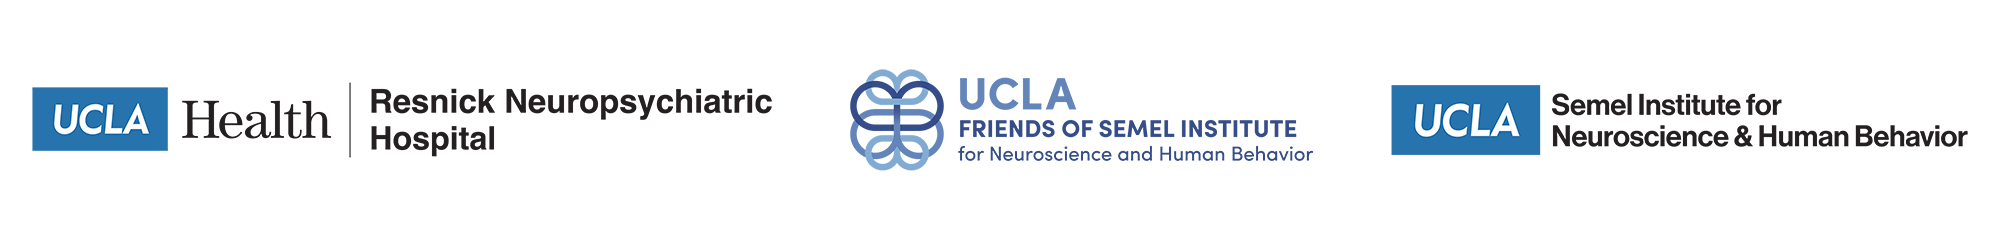 UCLA Health Resnick Neuropsychiatric Hospital, The Friends of the Semel Institute, and UCLA Semel Institute for Neuroscience & Human Behavior logos